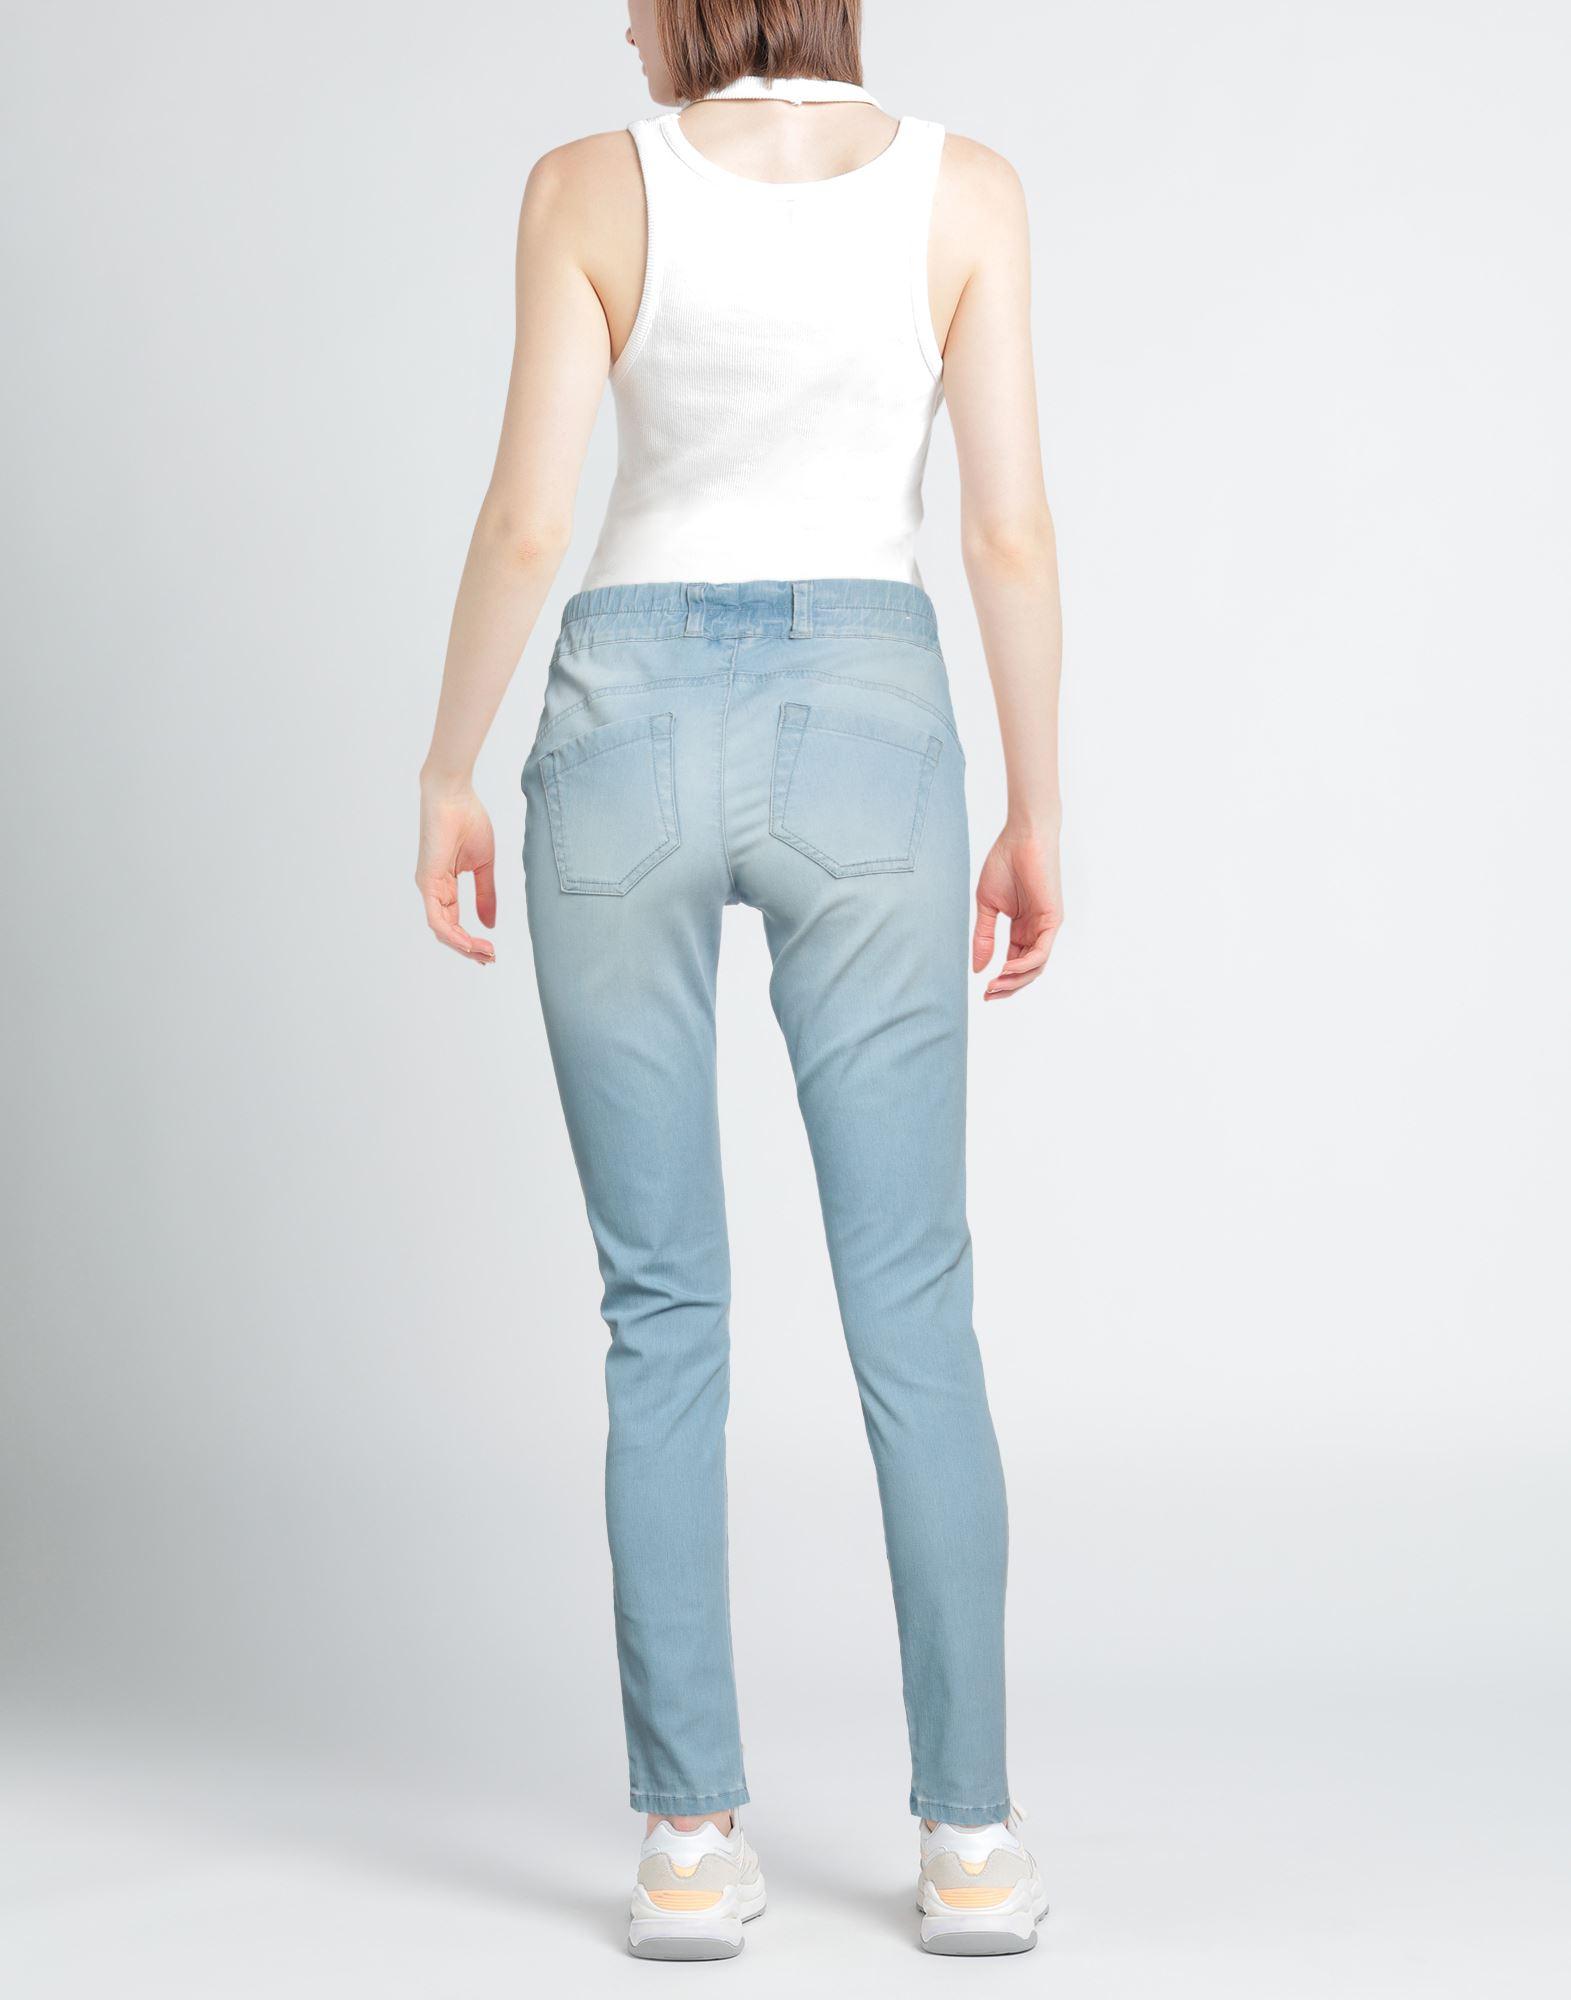 Marani Jeans Denim Trousers in Blue | Lyst